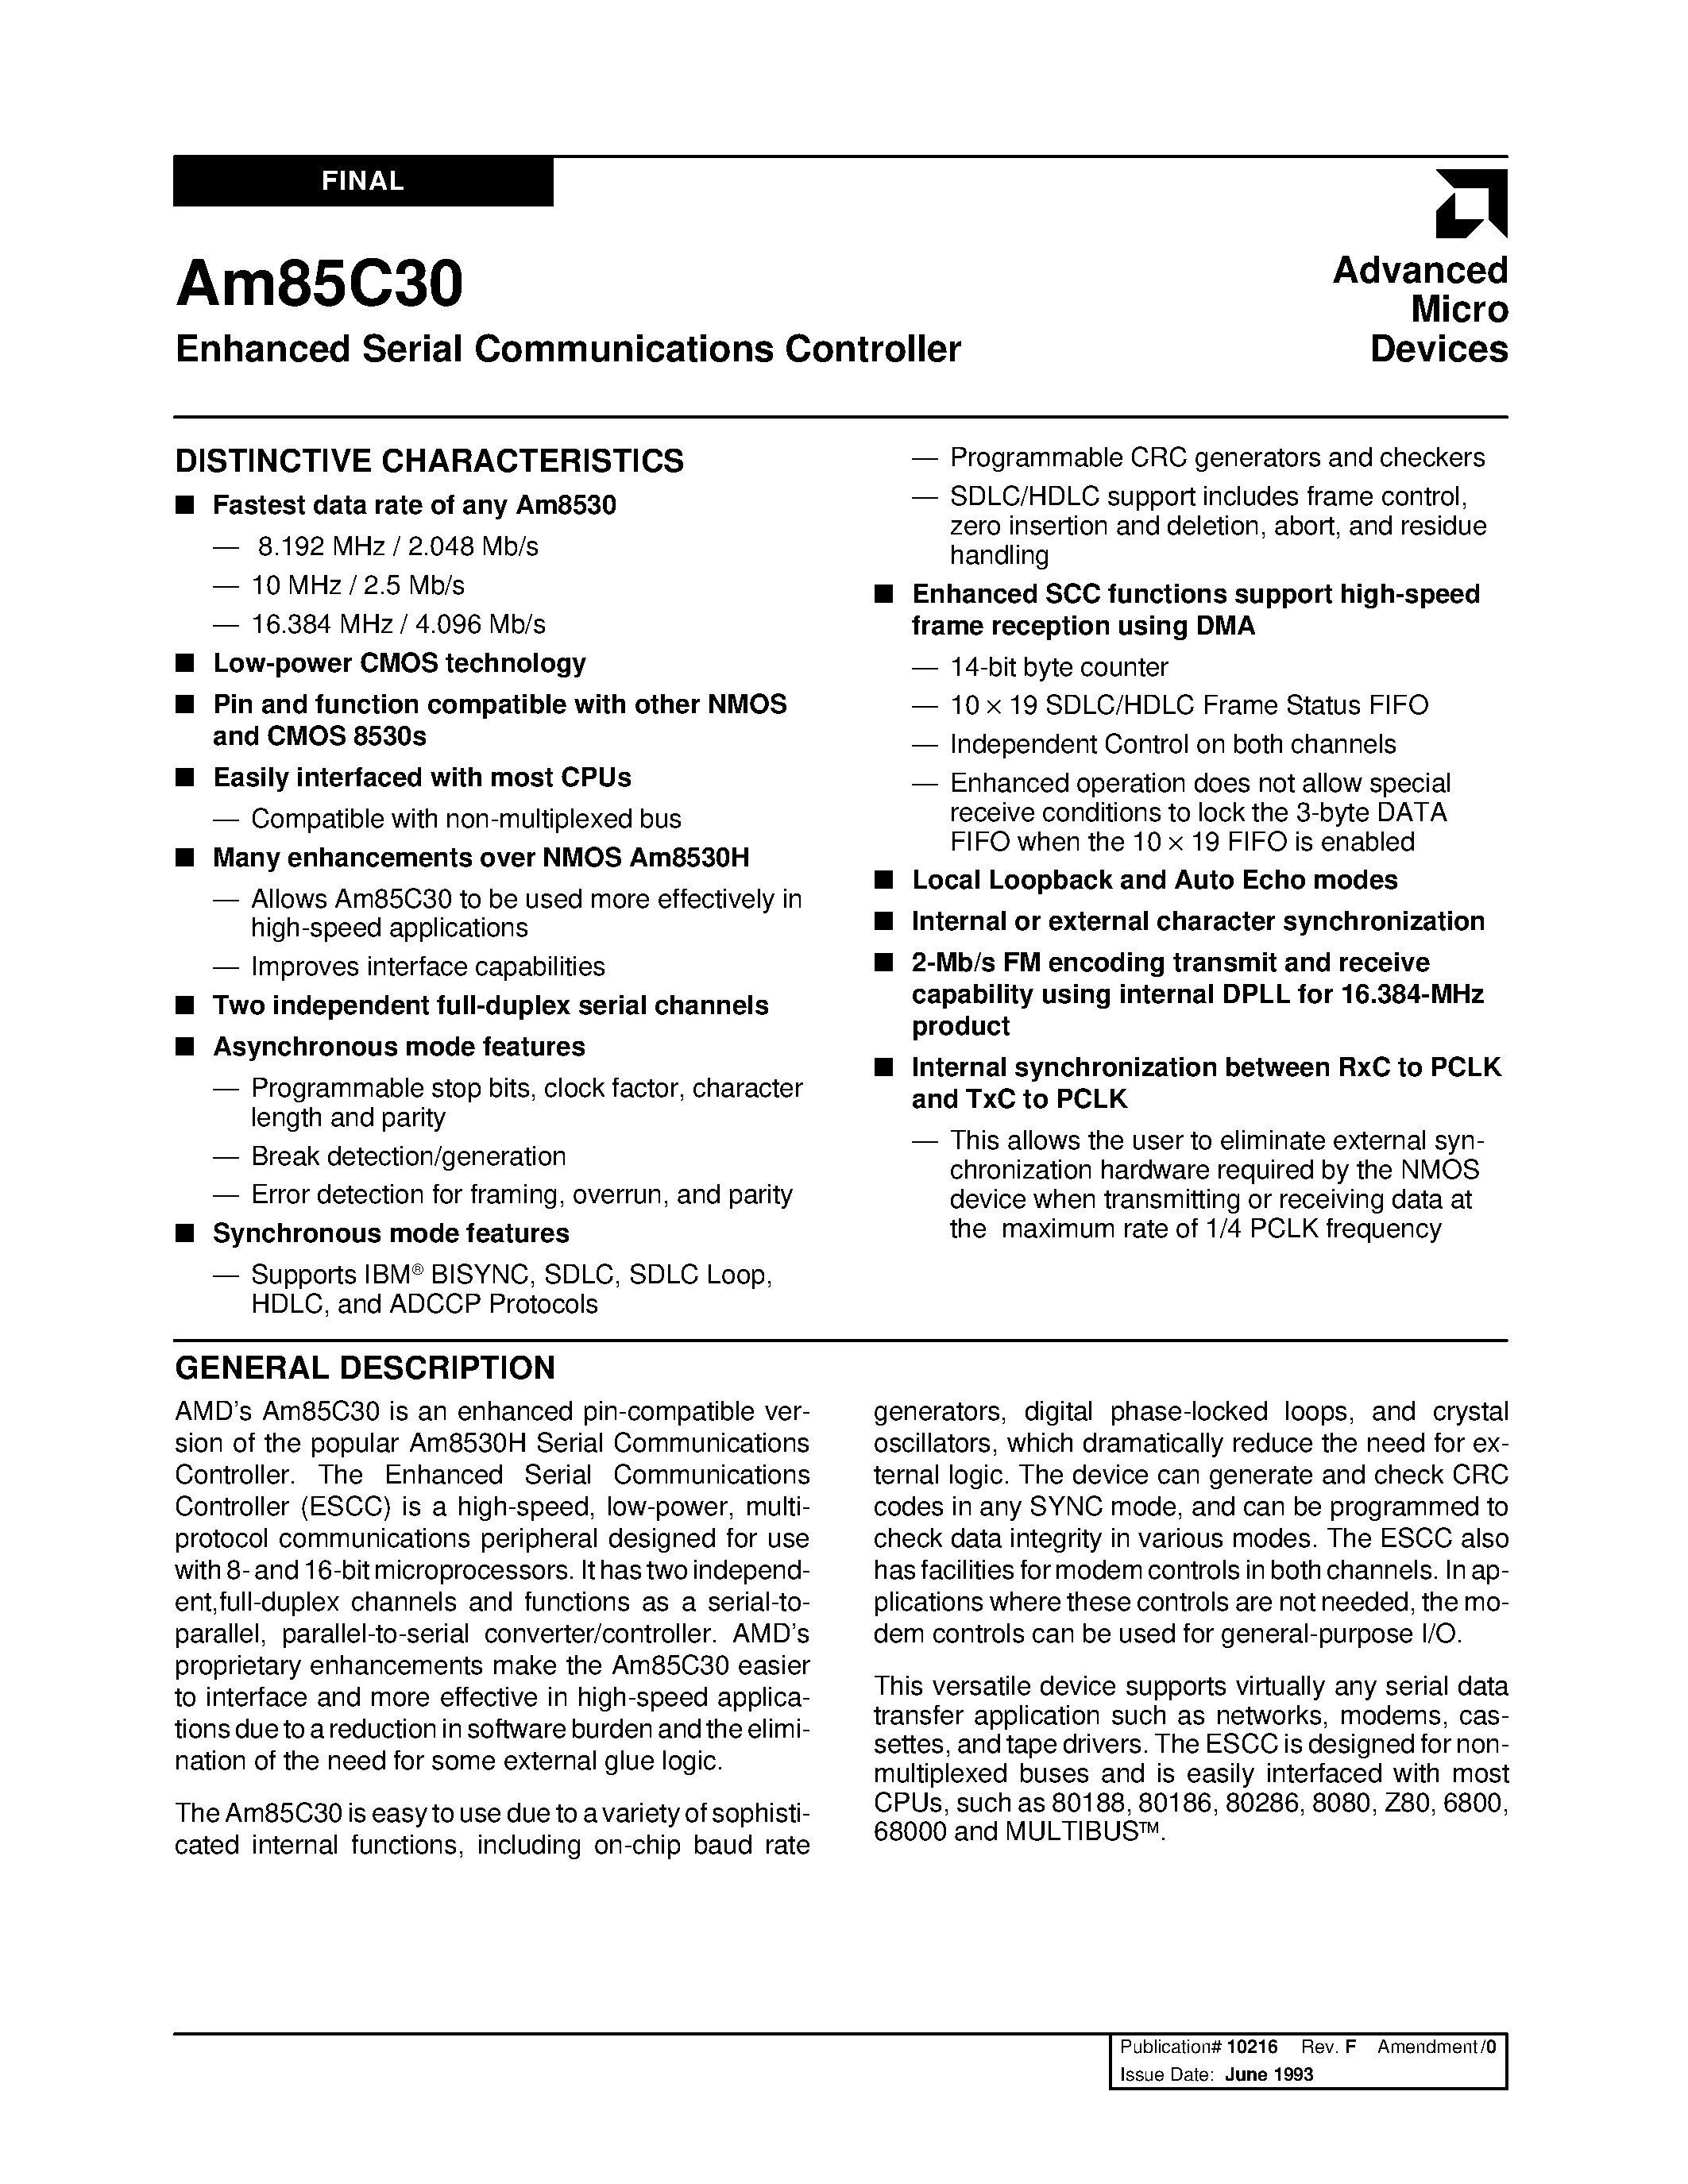 Datasheet AM85C30-10JC - Enhanced Serial Communications Controller page 1